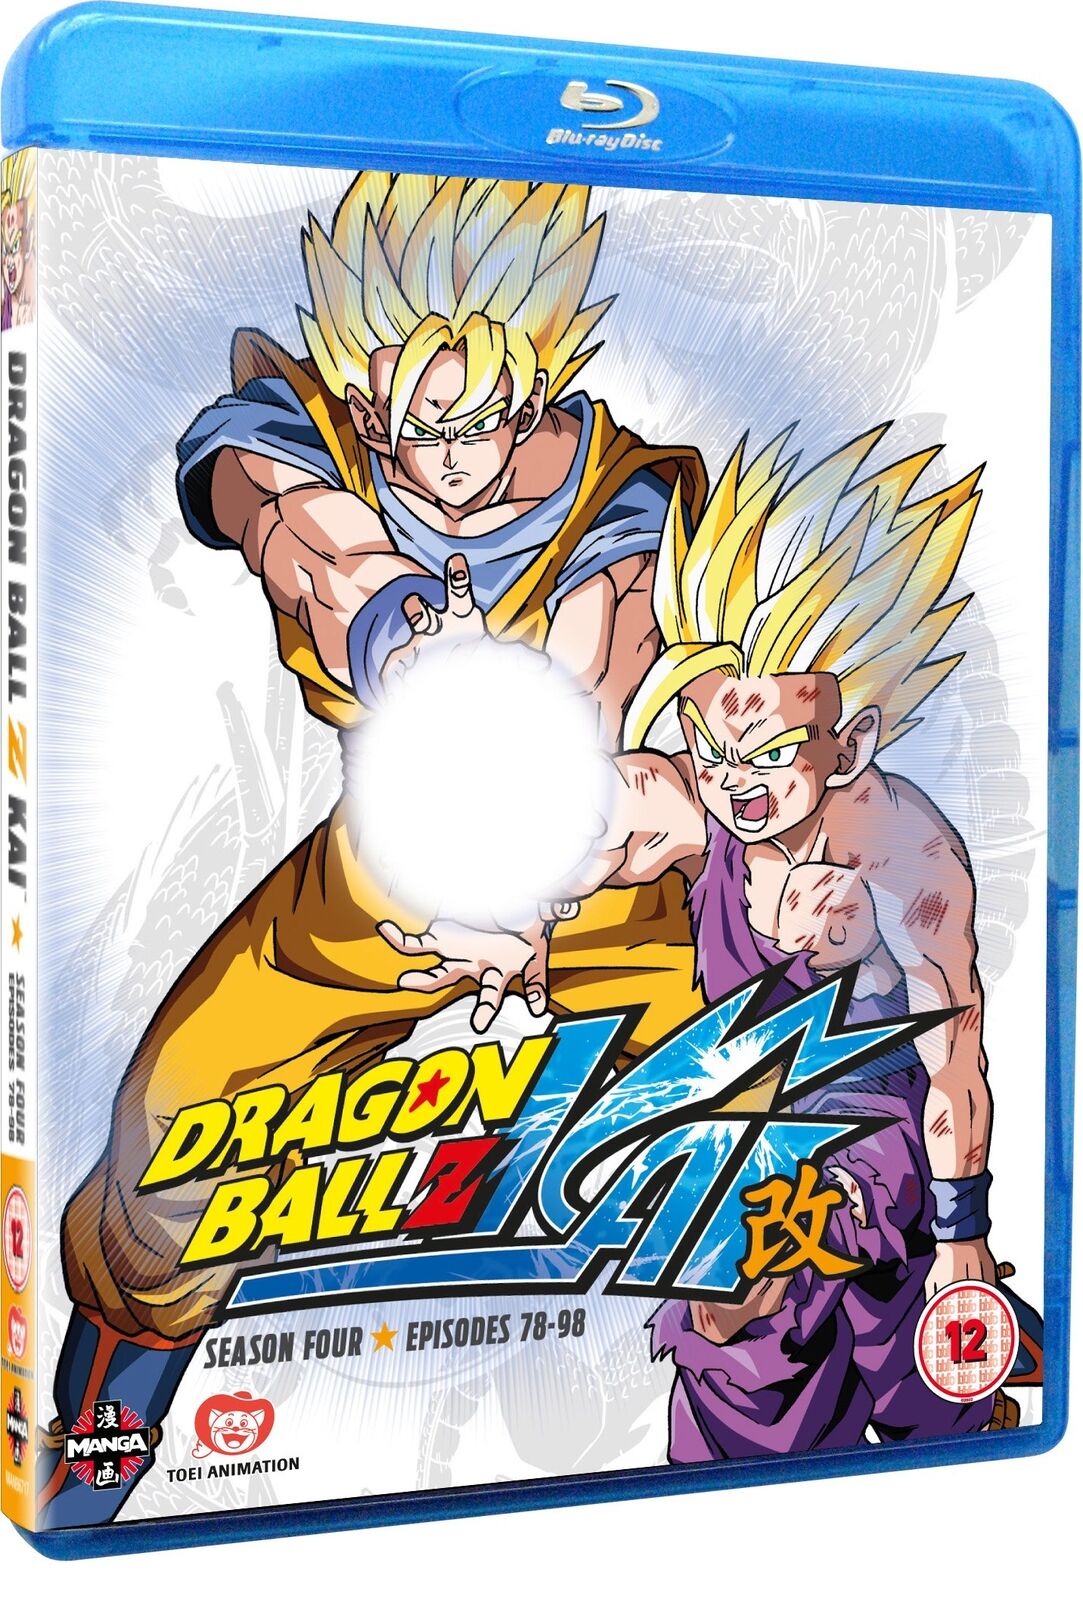 corey okrzesik recommends Dragon Ball Z Kai Full Episodes